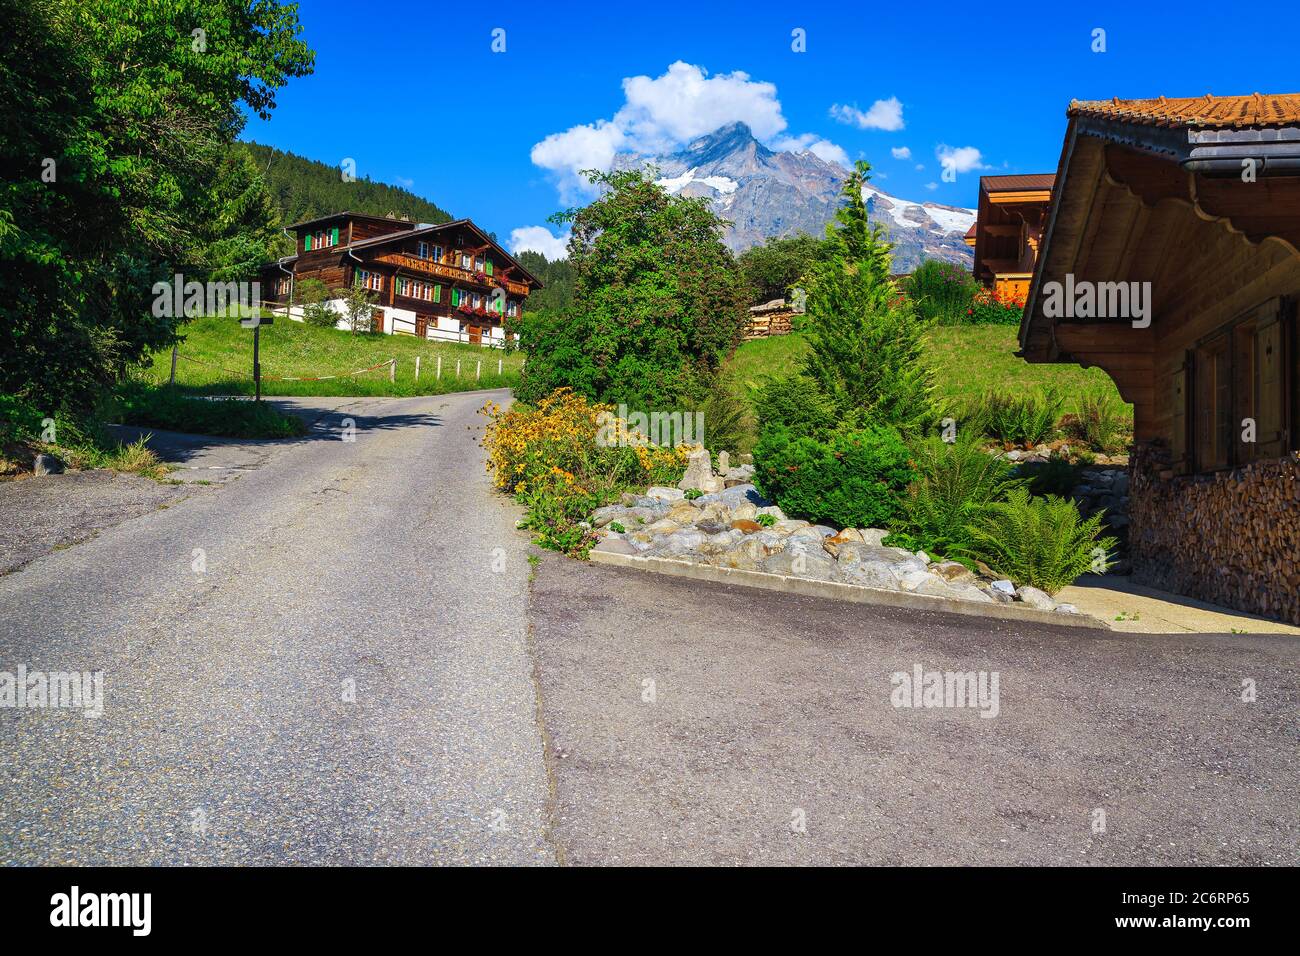 Graziose case in legno con splendidi giardini e splendide viste, Grindelwald, Oberland Bernese, Svizzera, Europa Foto Stock